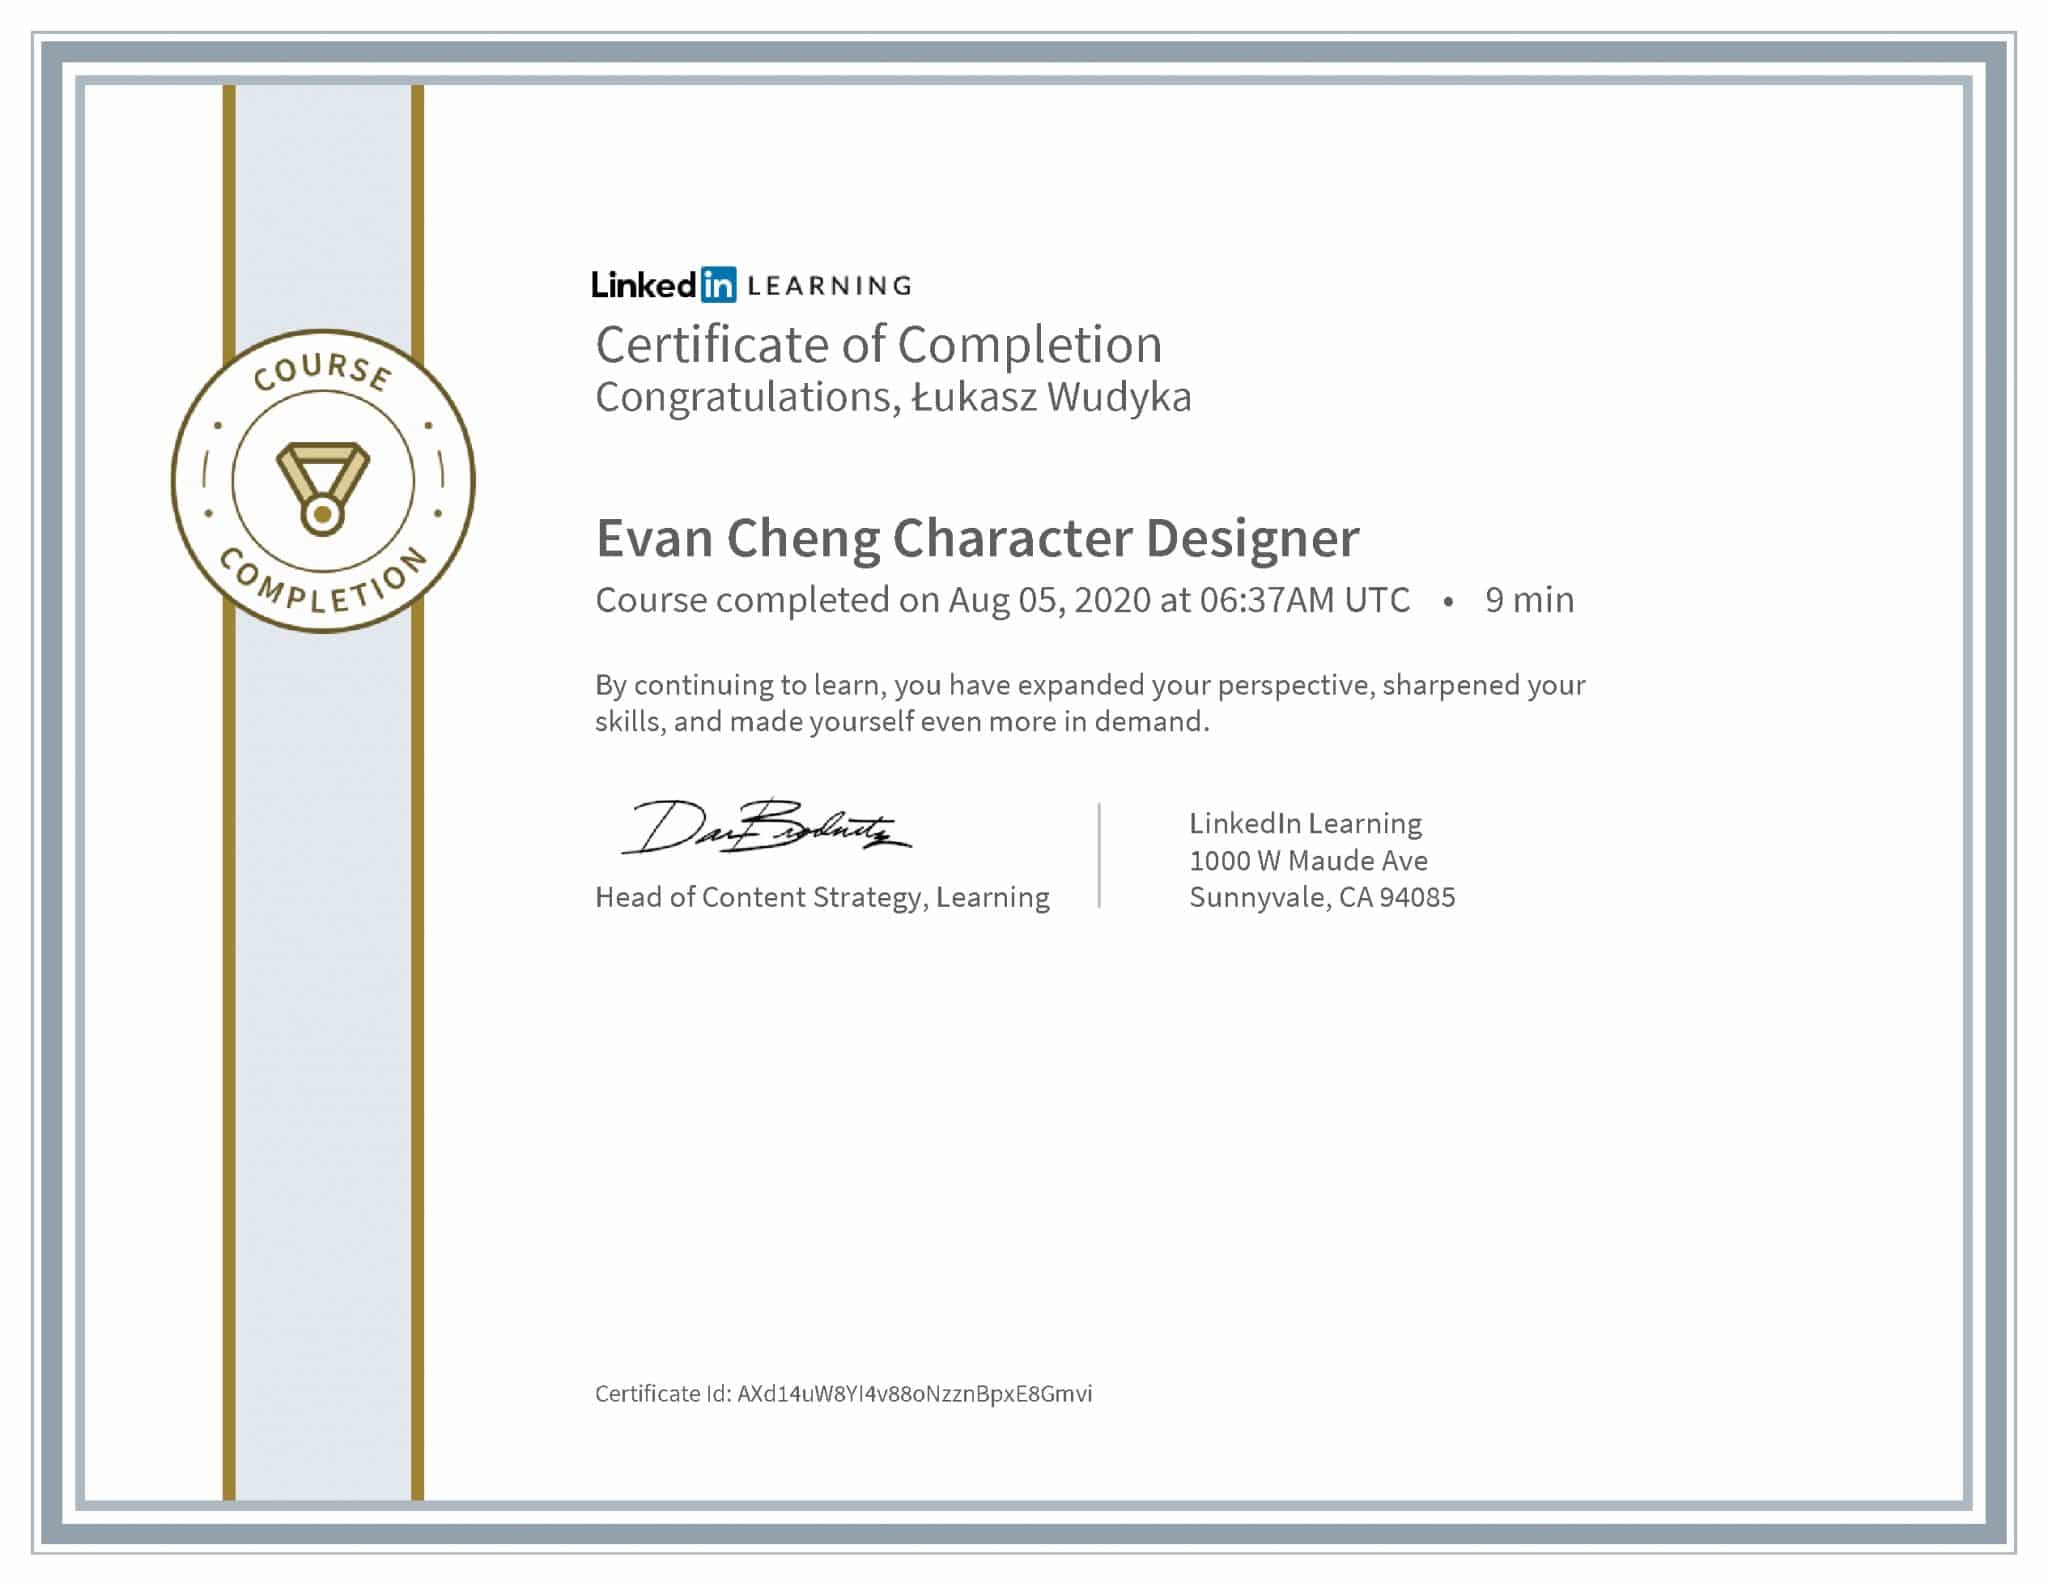 Łukasz Wudyka certyfikat LinkedIn Evan Cheng Character Designer